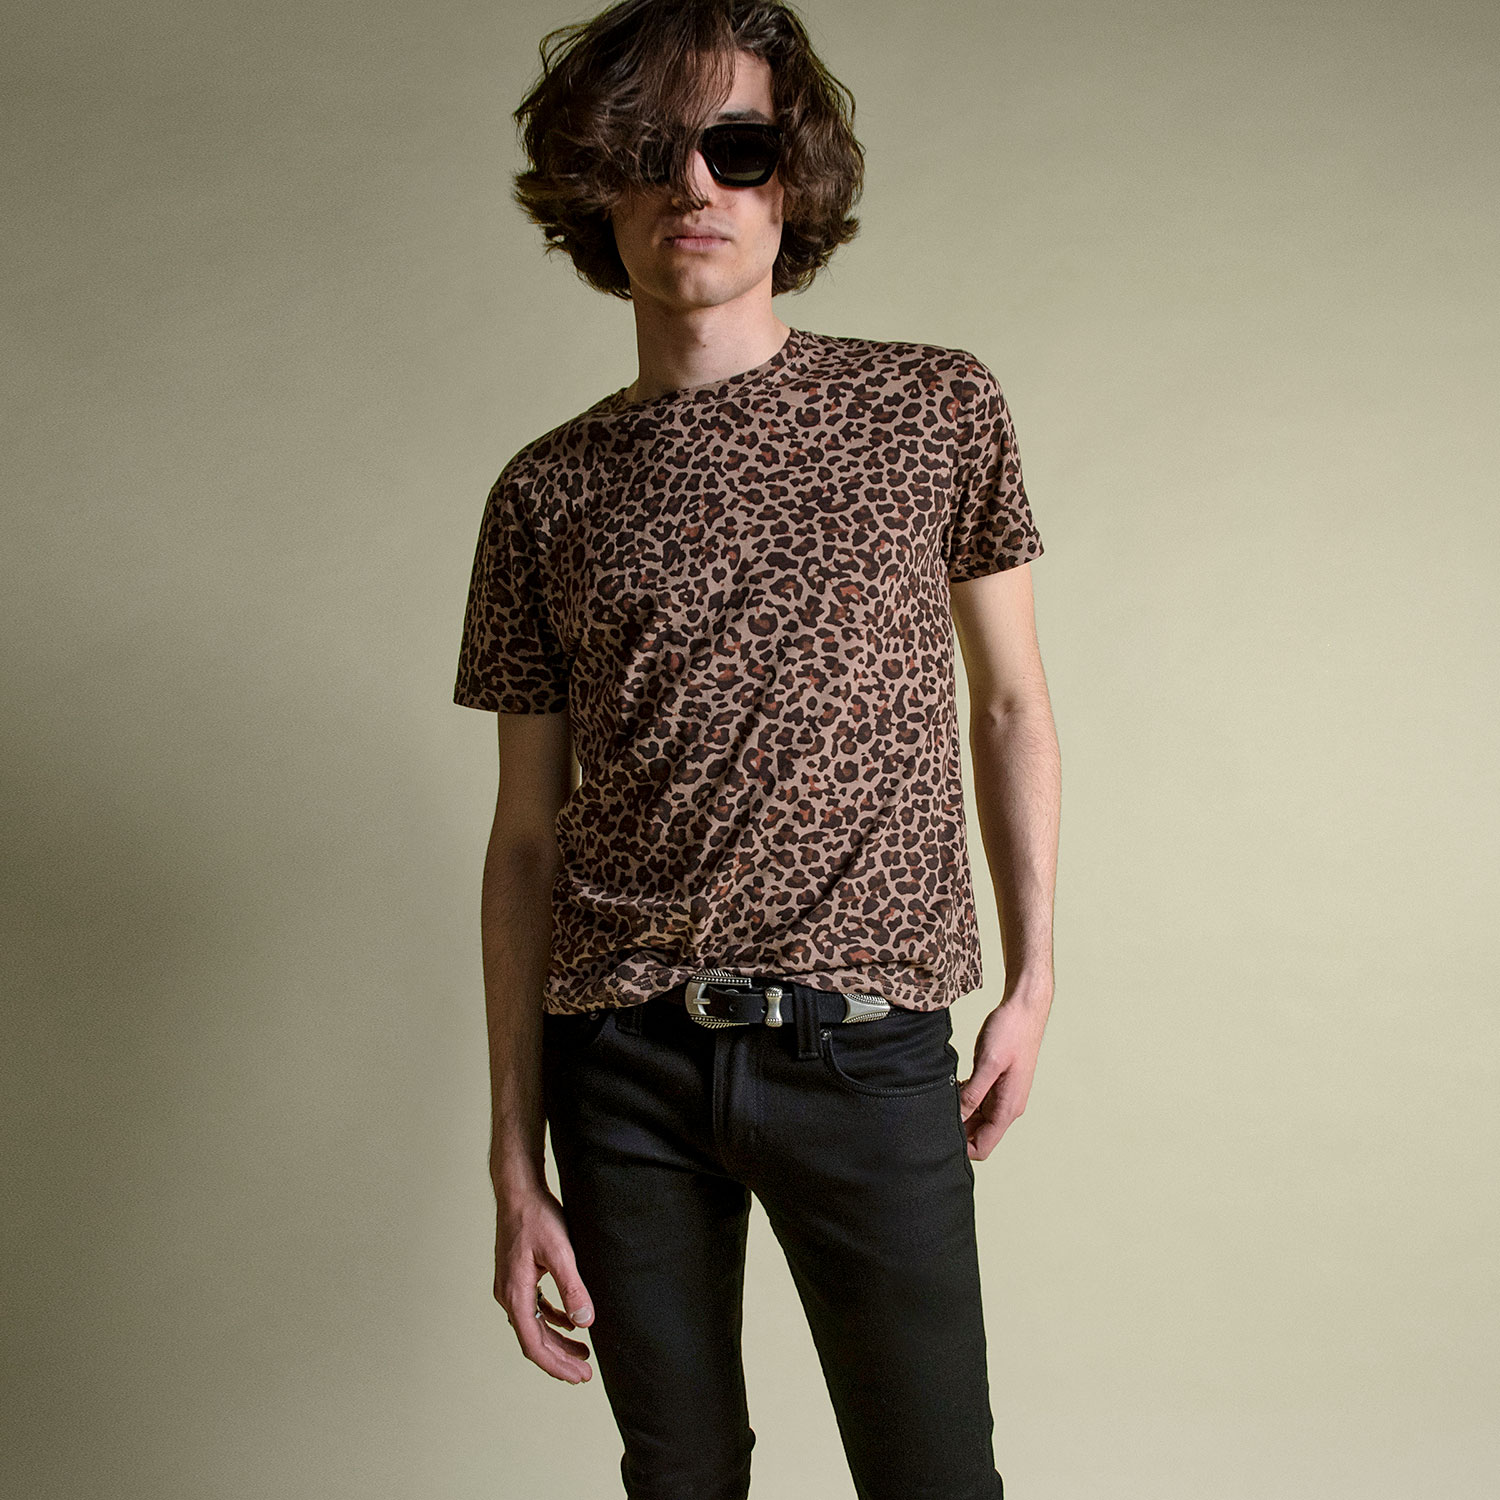 Jax - Leopard Print T-Shirt - Men's by Straight to Hell